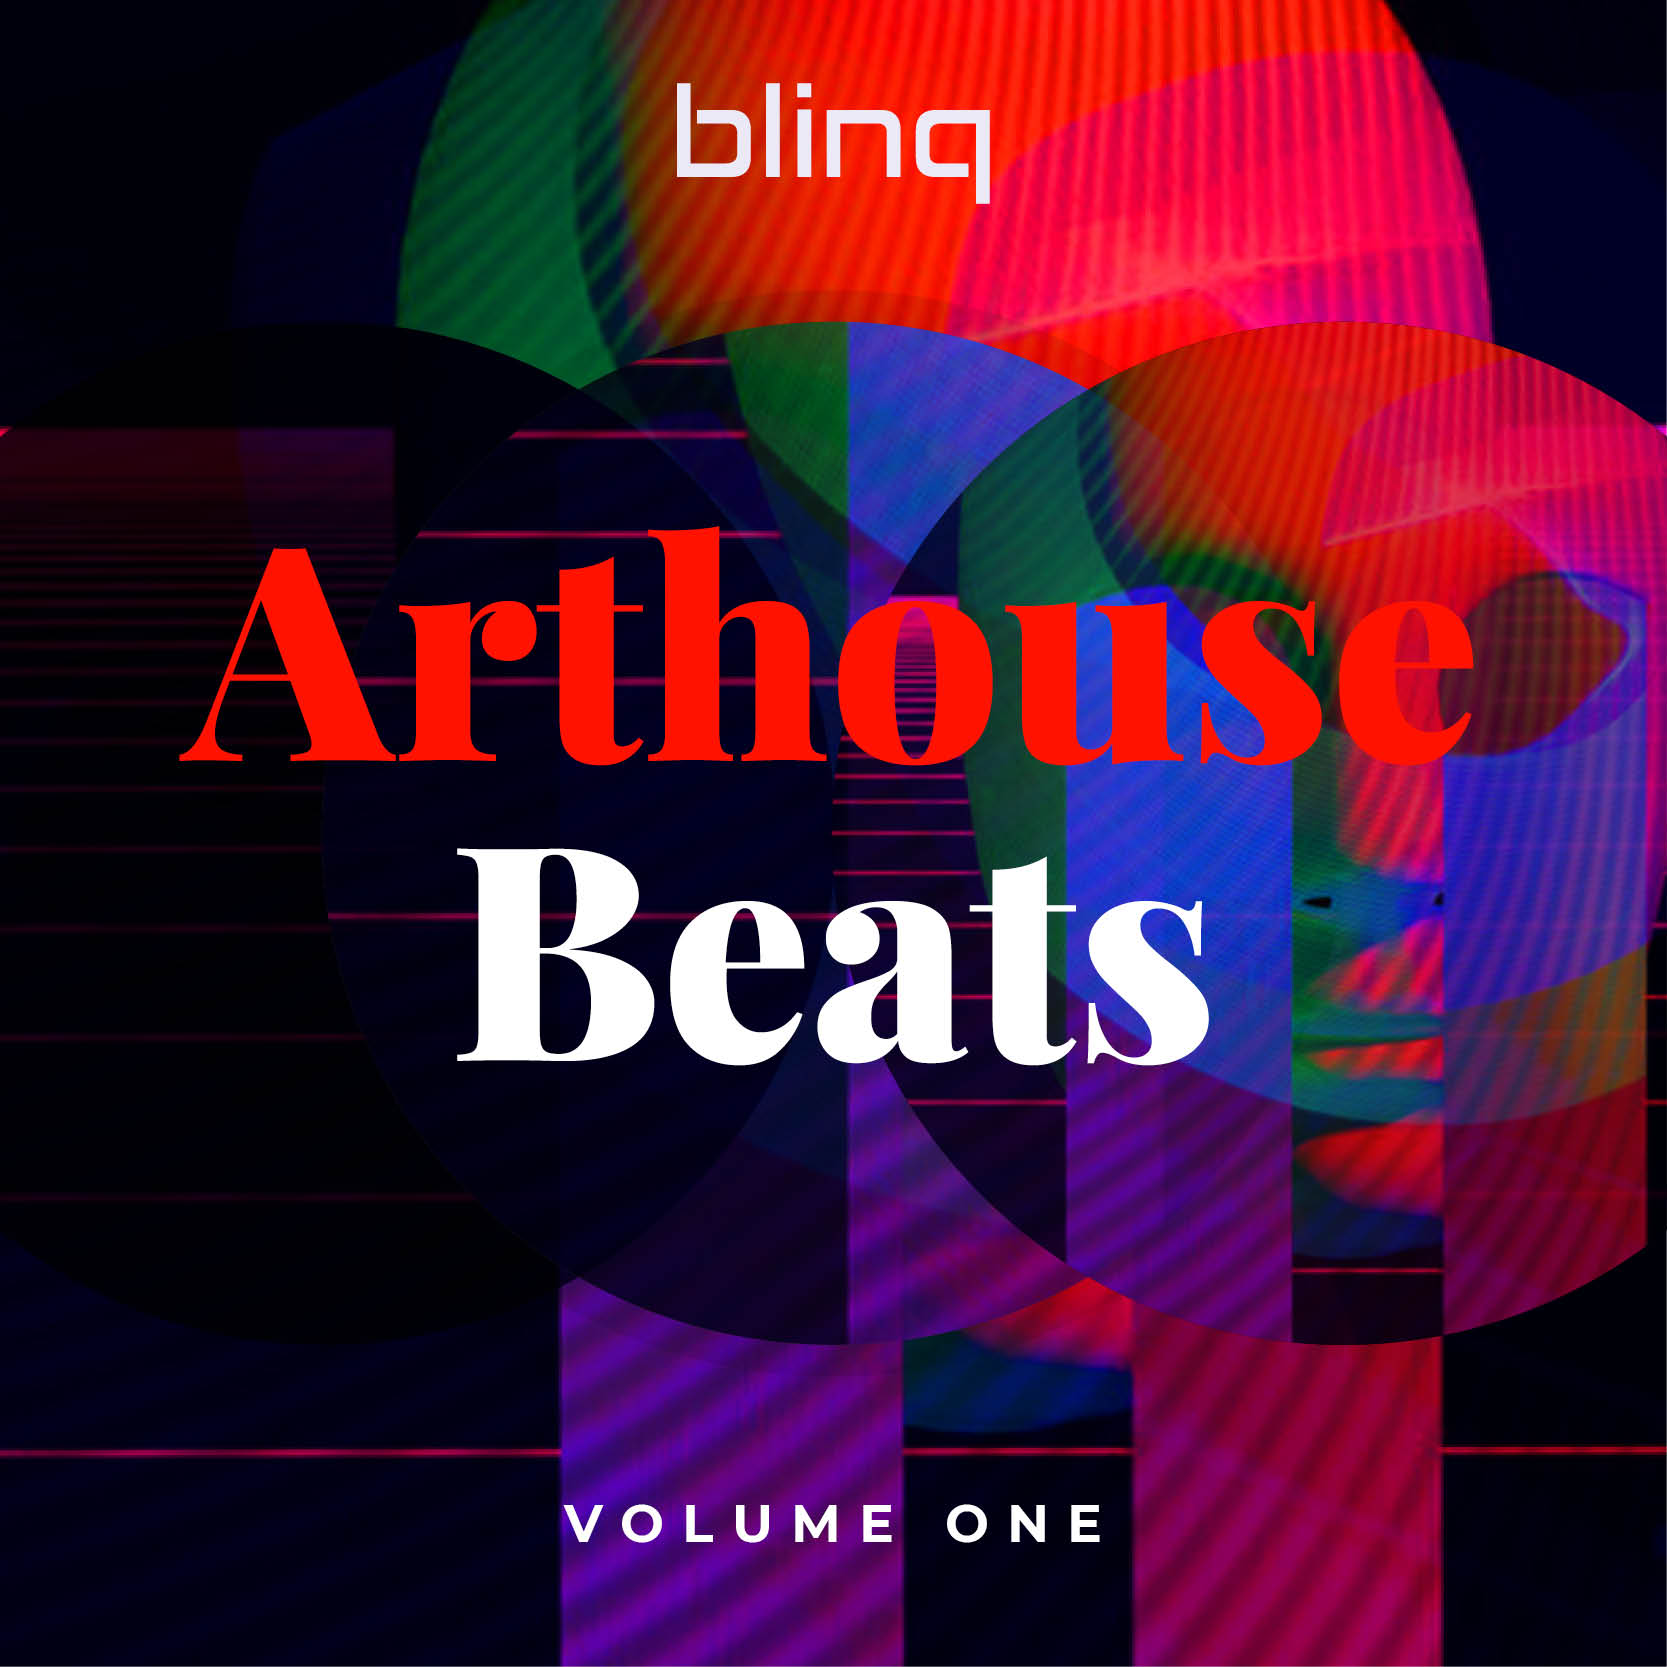 Arthouse Beats